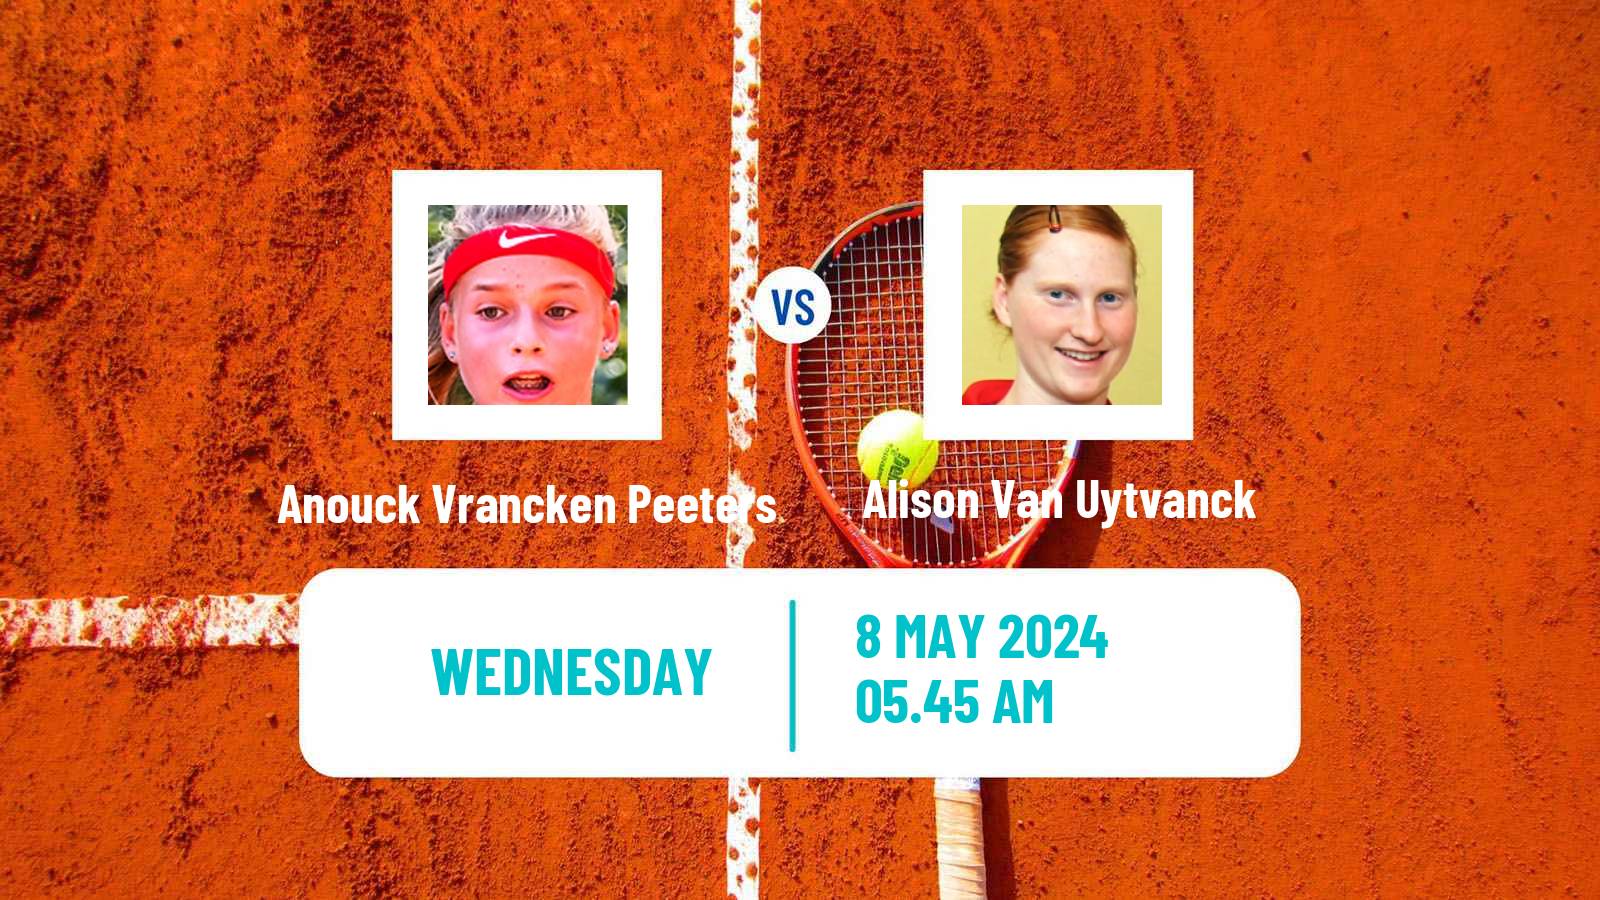 Tennis ITF W35 Bastad Women Anouck Vrancken Peeters - Alison Van Uytvanck